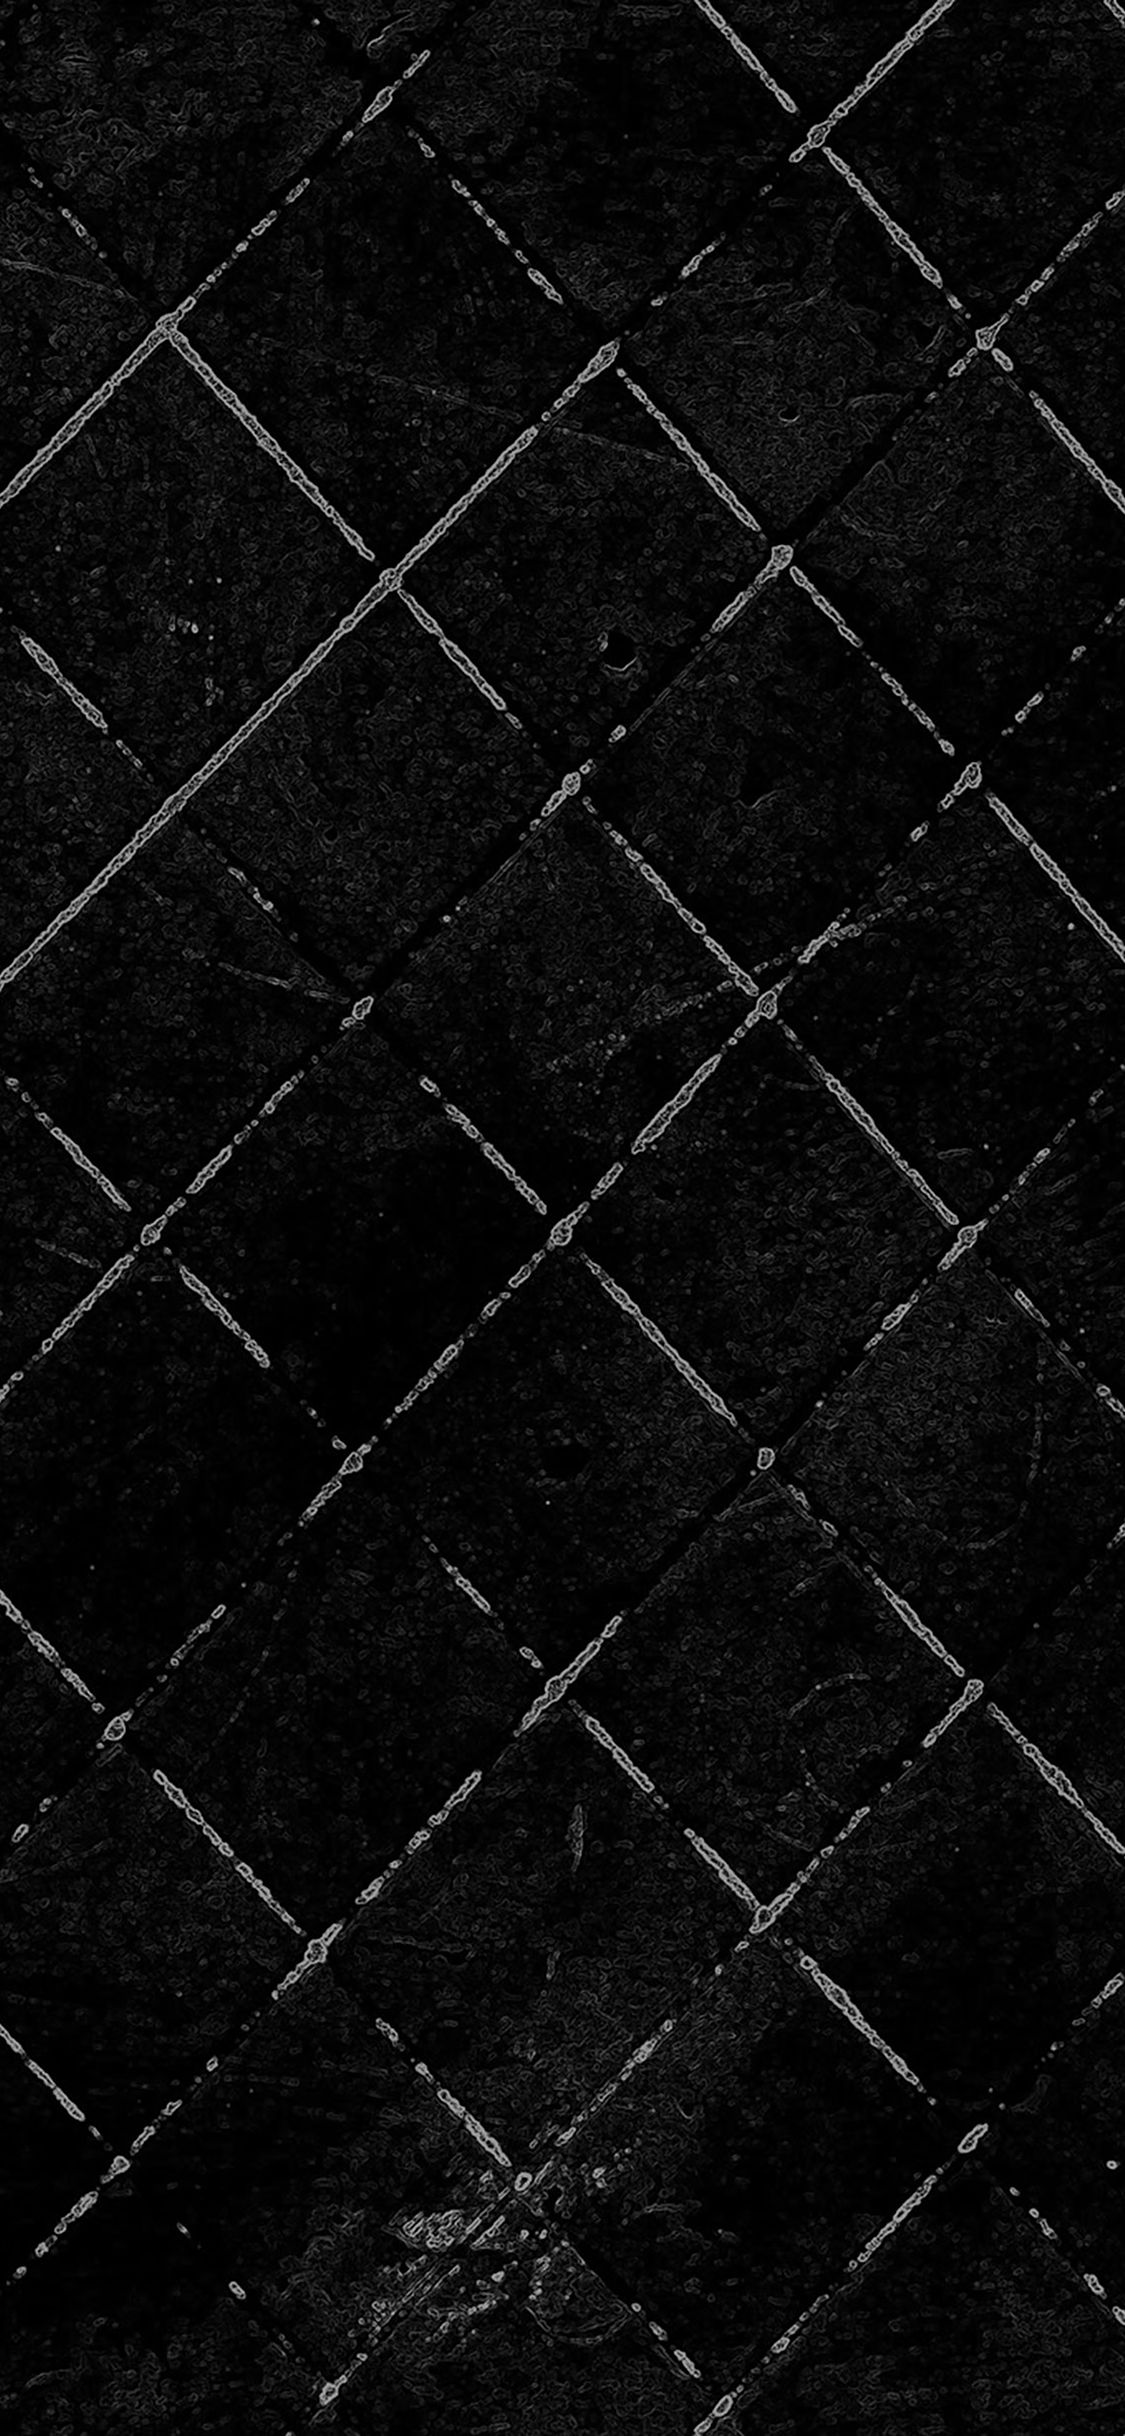 Black and white checkerboard pattern background - Grunge